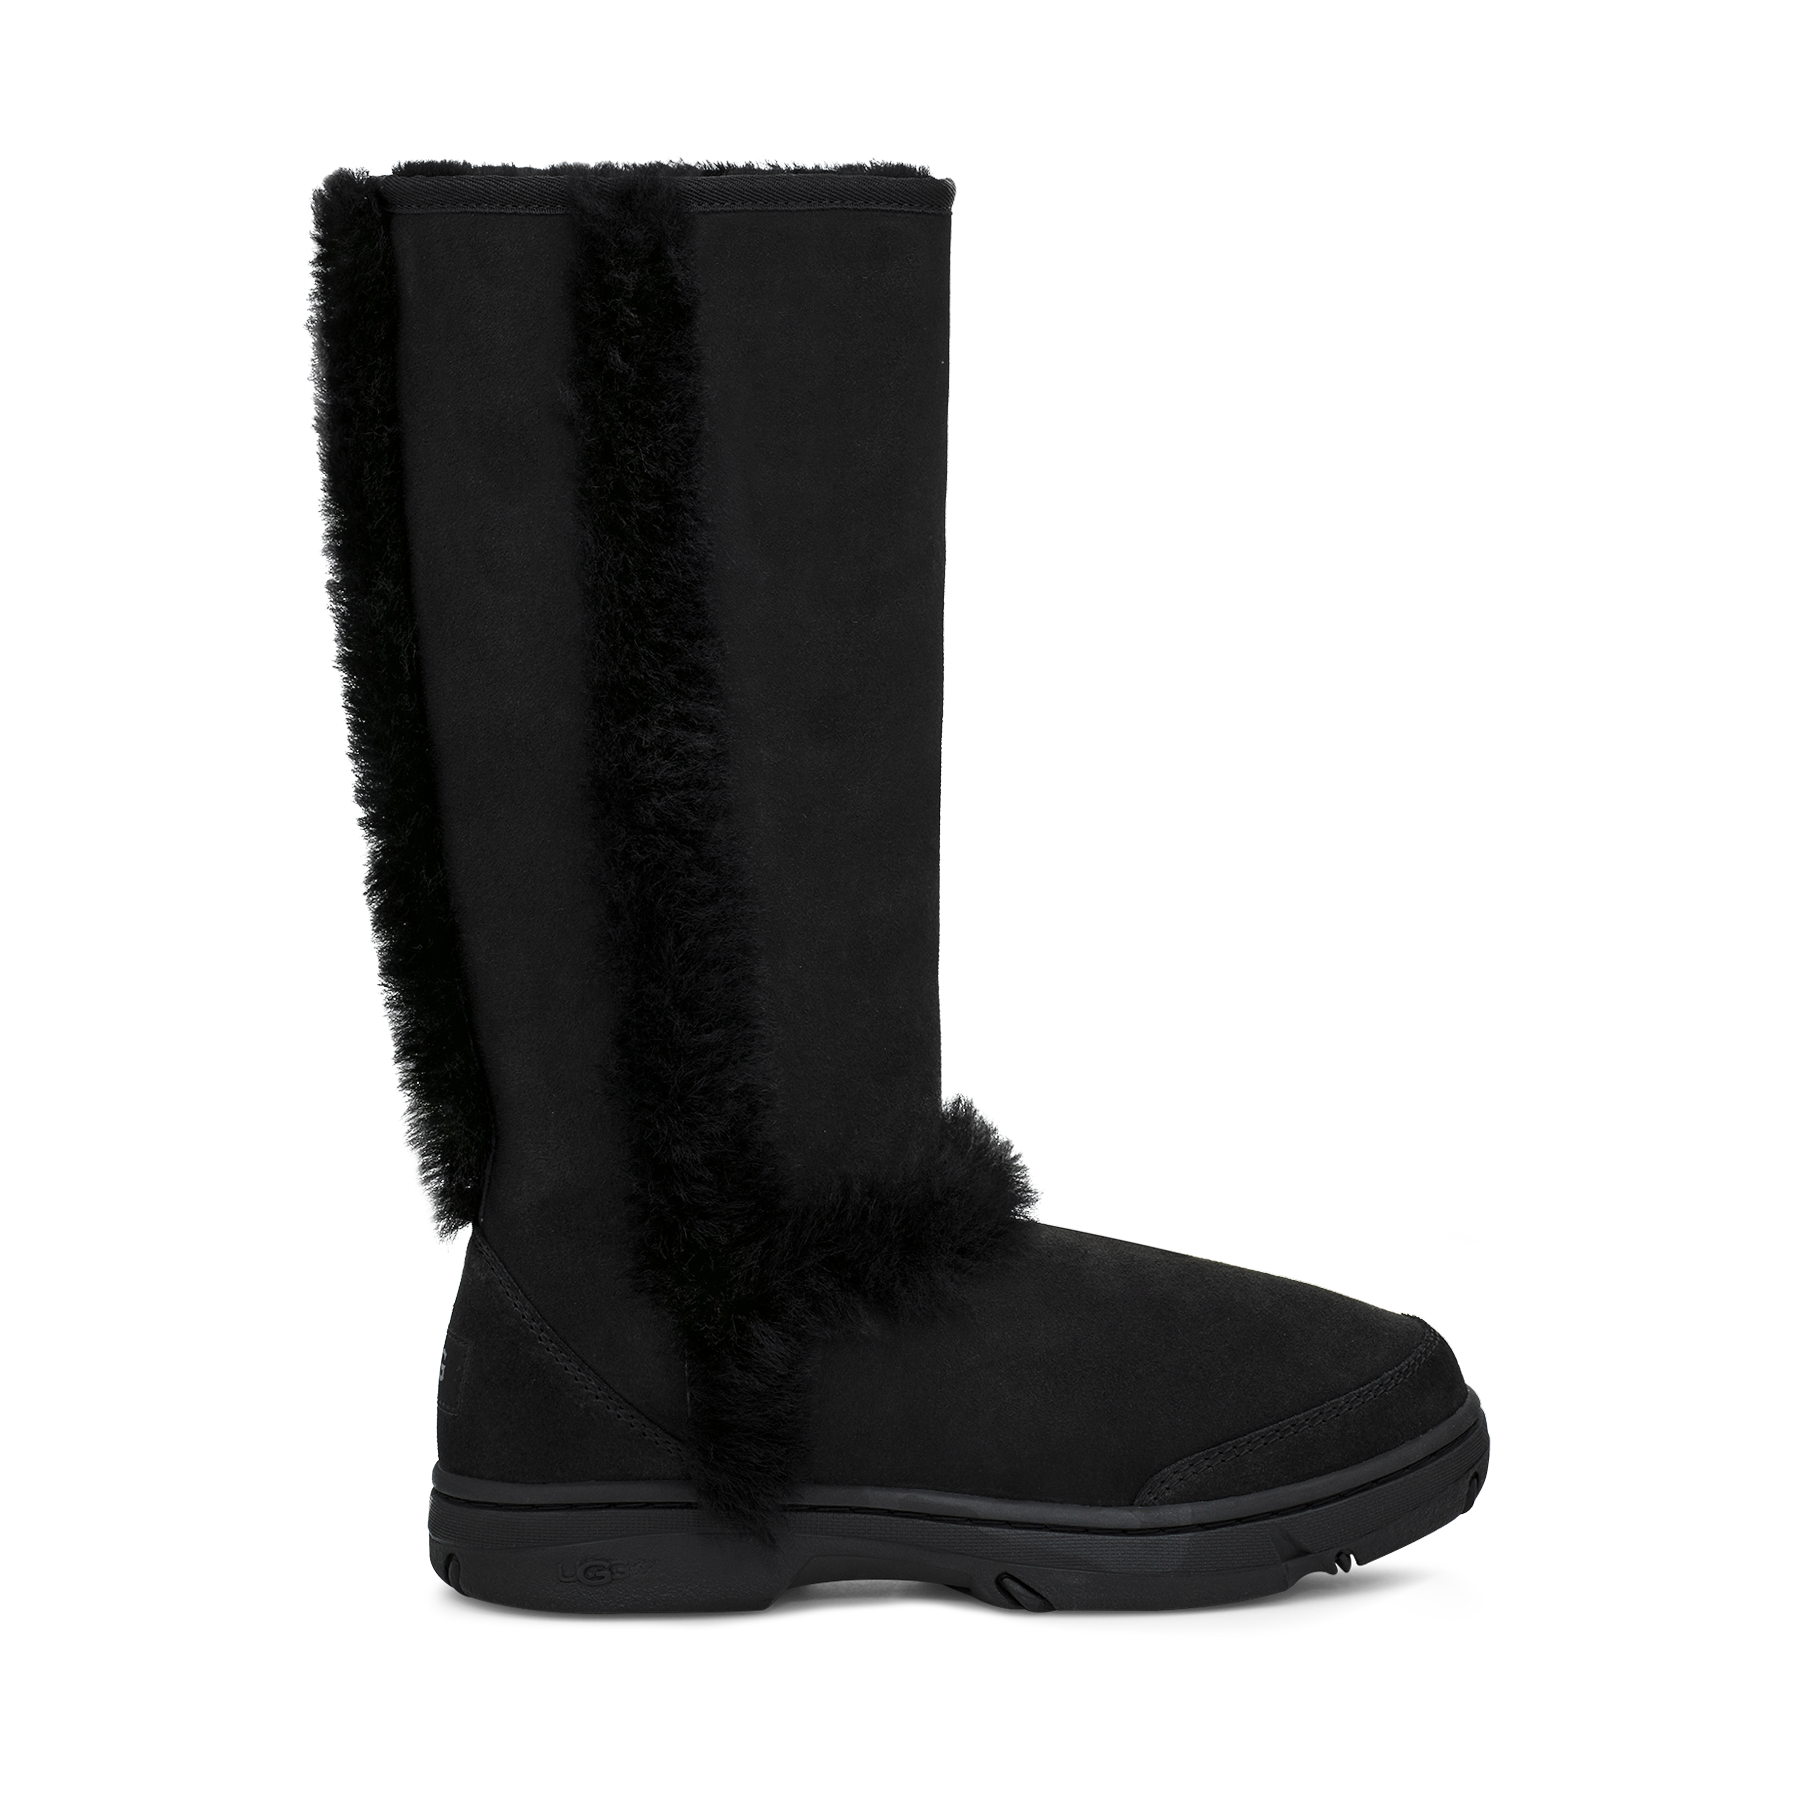 Premier stoeprand Additief UGG® Sunburst Tall for Women | Tall Exposed Sheepskin Boots at UGG.com